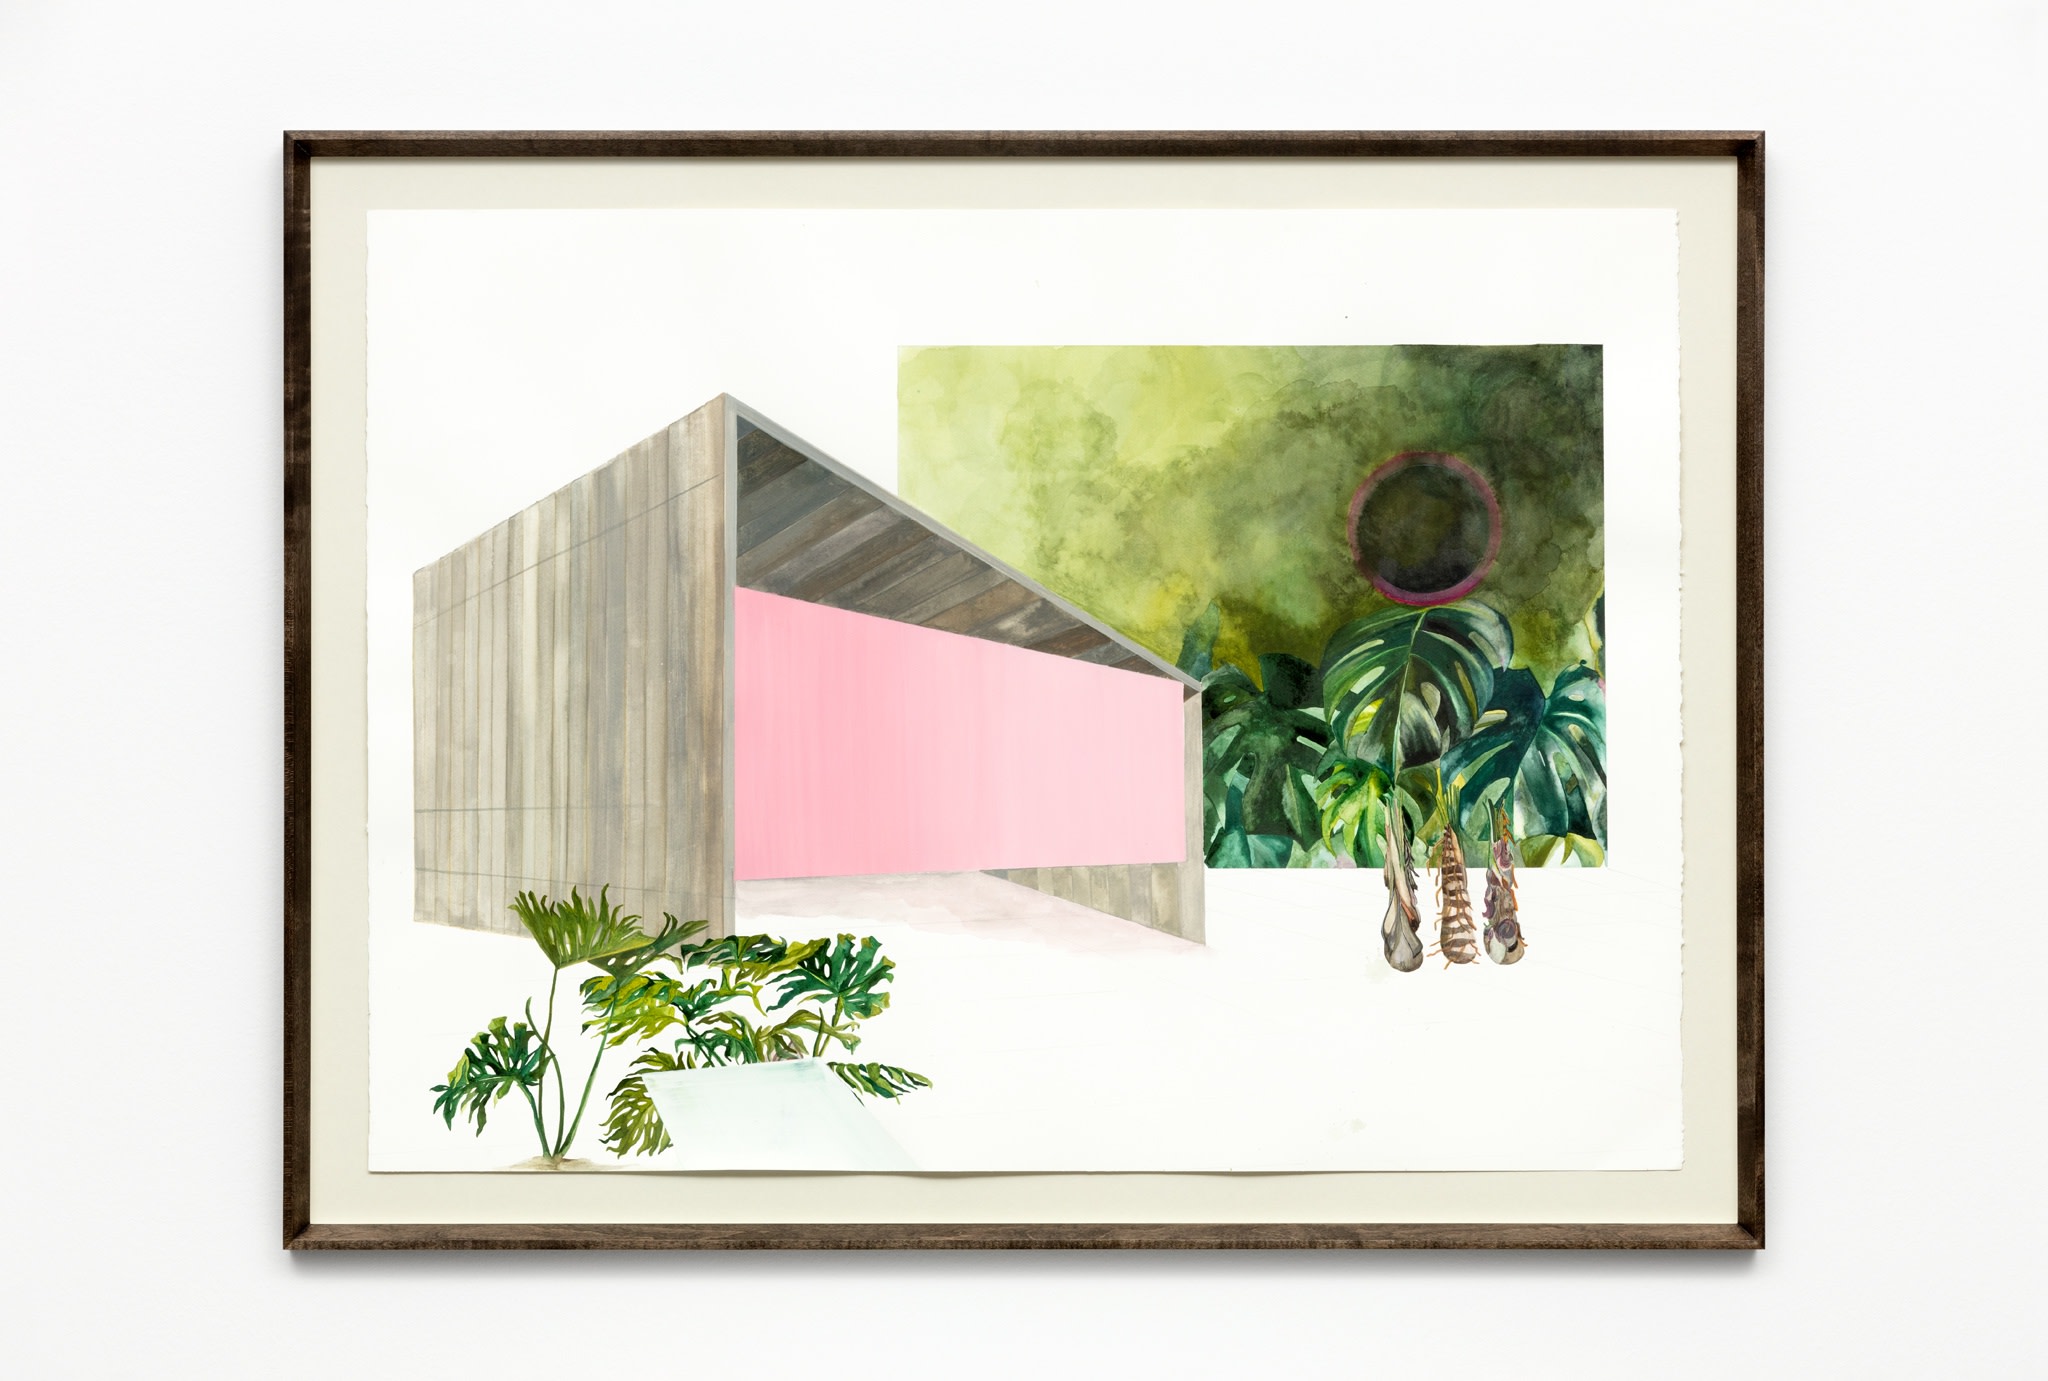 Isa Melsheimer, Nr. 461, 2020, gouache on paper, 56 x 76,5 cm (22 1/8 x 29 7/8 in) (unframed), 65 x 86 x 4 cm (25 5/8 x 33 7/8 x 1 5/8 in) (framed). Photo © Andrea Rossetti